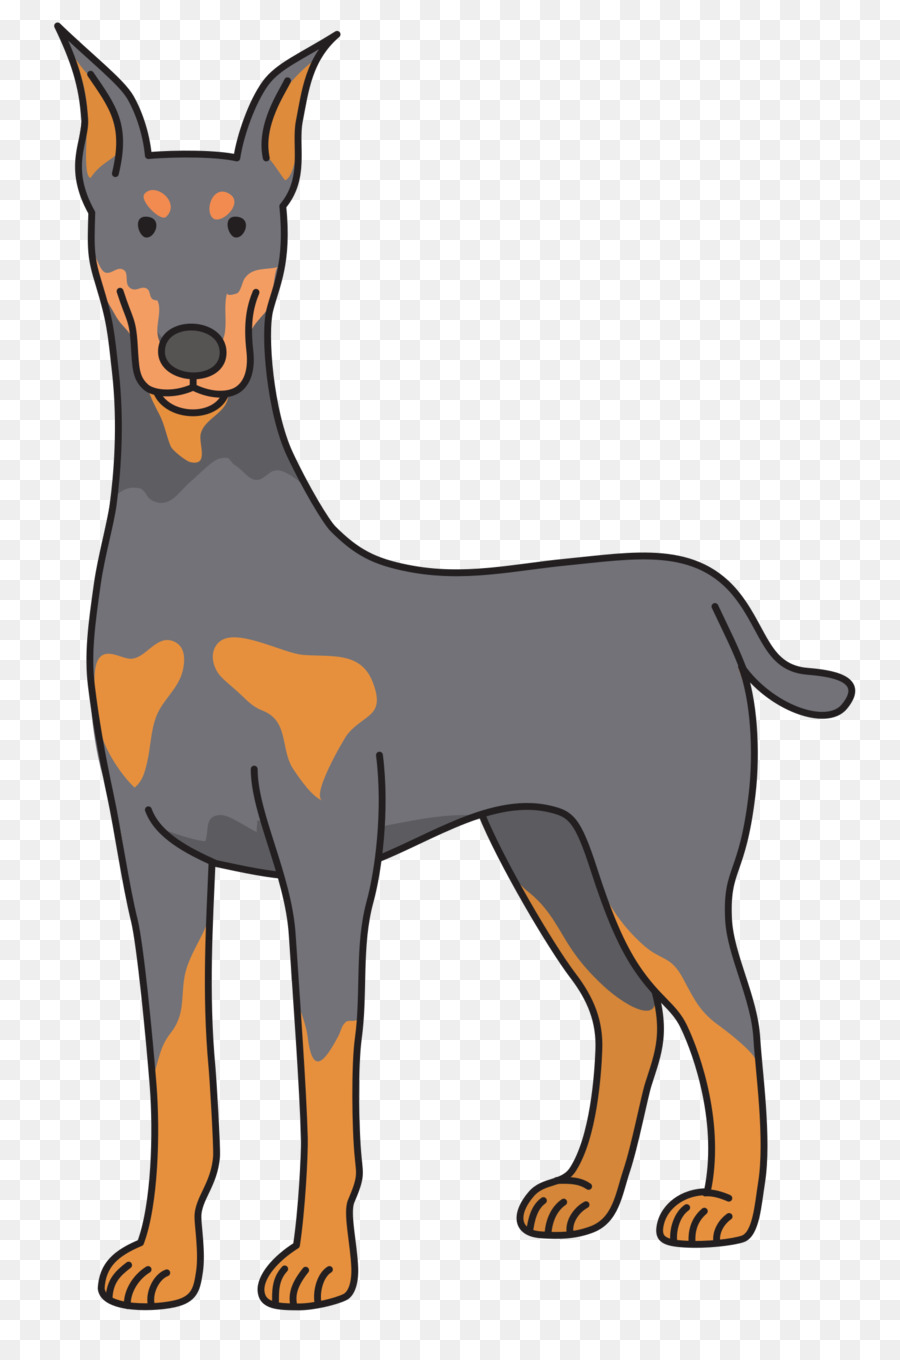 Dobermann Puppy Clip art - Dog png download - 1590*2400 - Free Transparent Dobermann png Download.